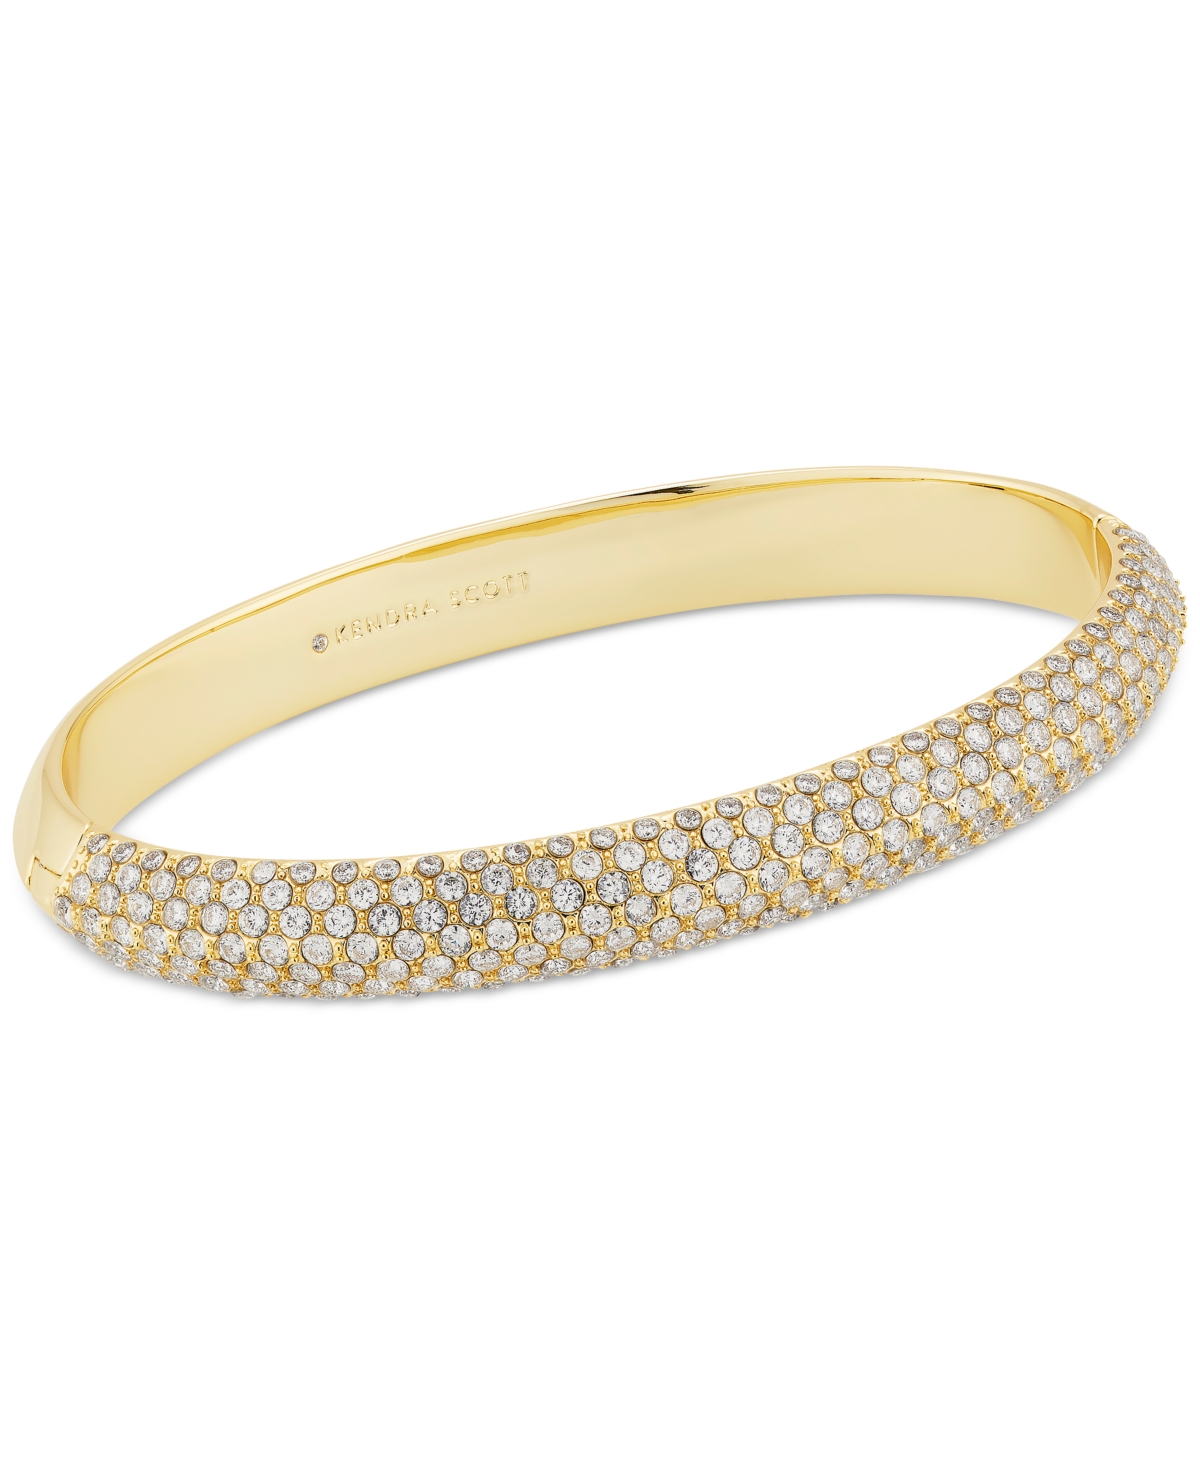 Kendra Scott 14k Gold-plated Pave Bangle Bracelet In Gold White